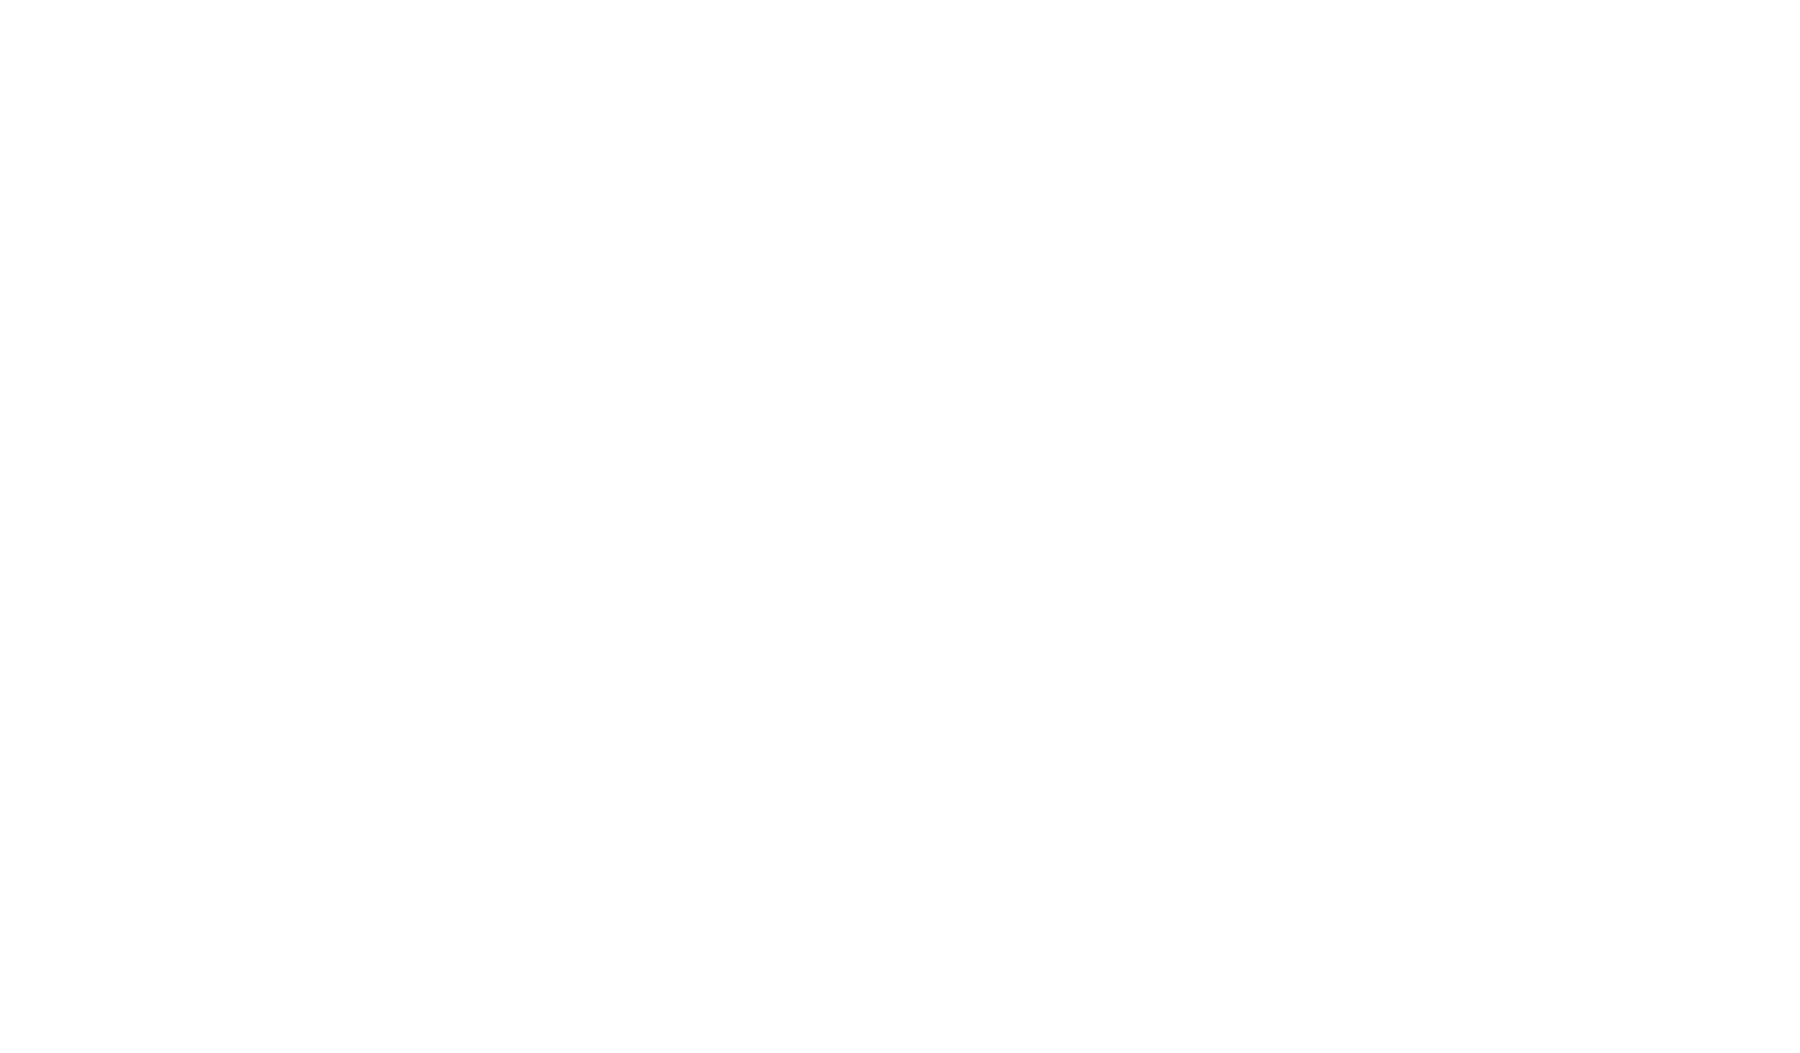  Boulevard Animal Hospital - Veterinarian in Athens, GA